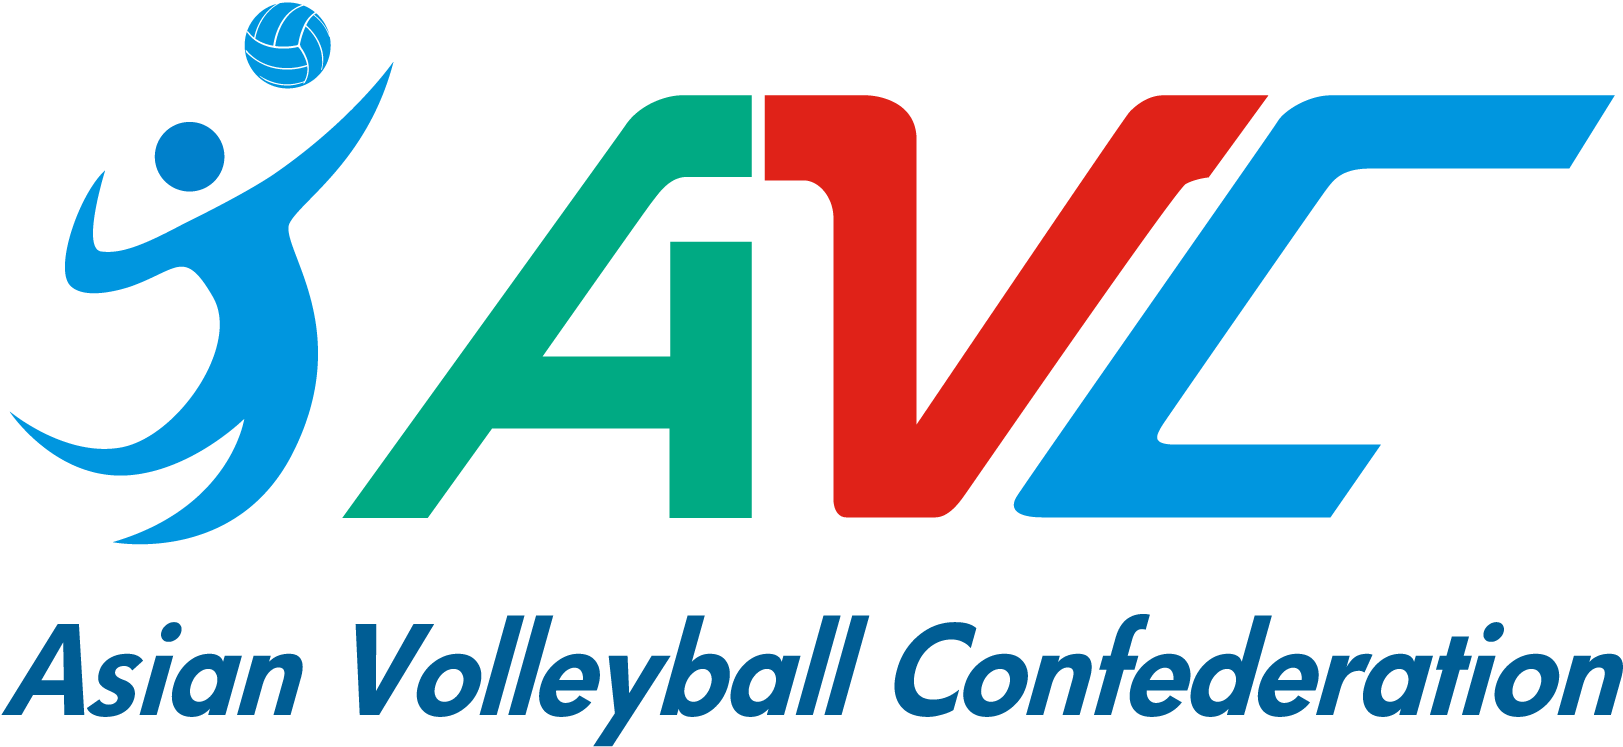 Logo Asian Volleyball Confederation - Asian Volleyball Confederation Clipart (2000x750), Png Download